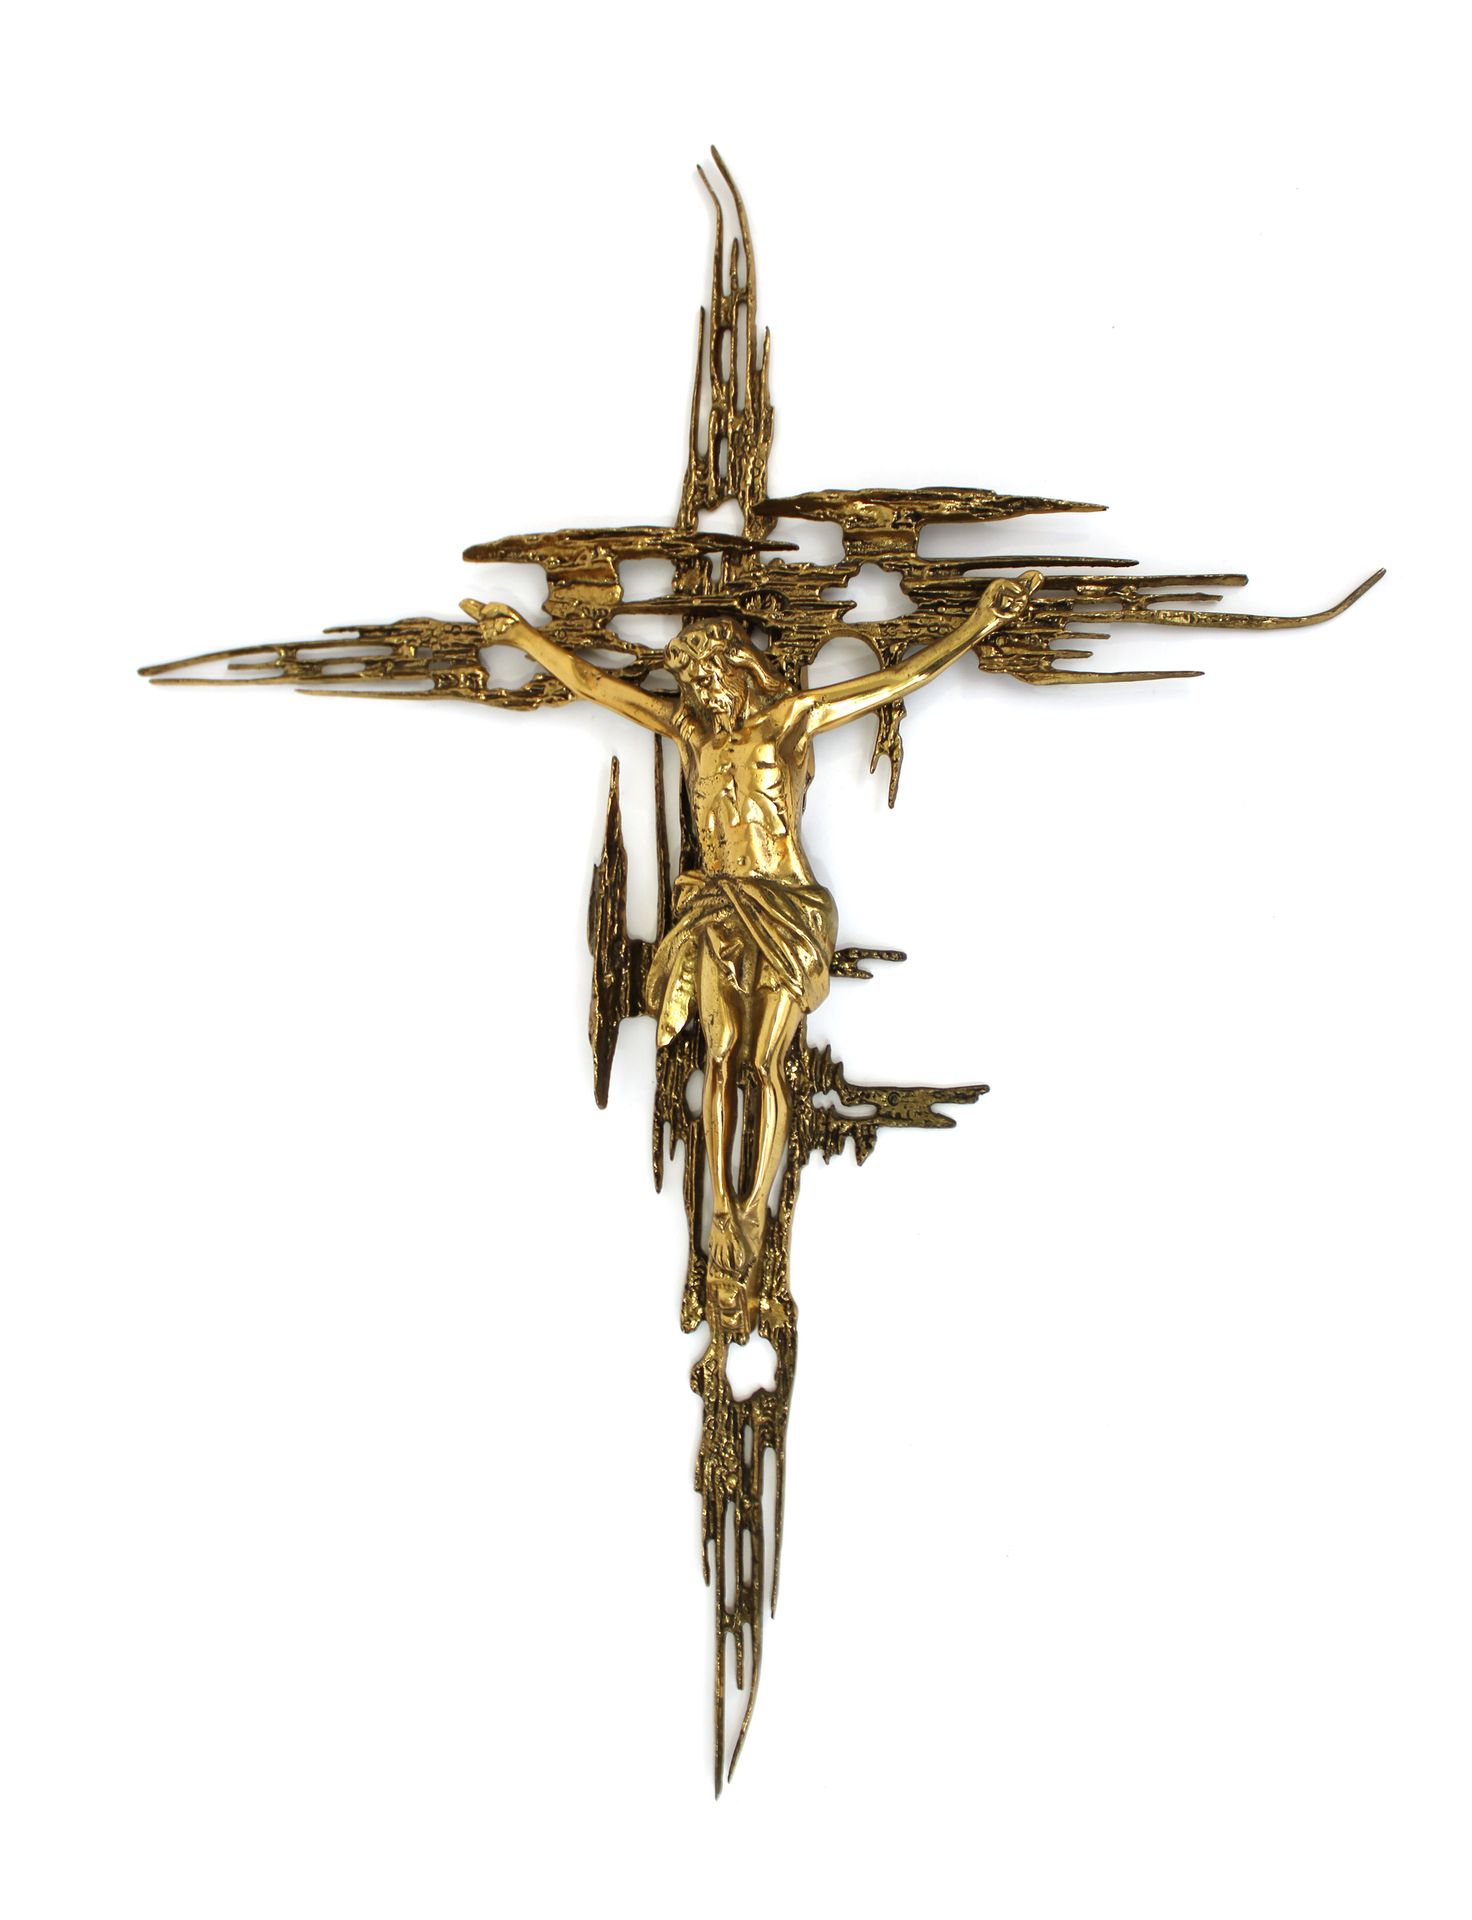 Null Nach Salvador DALI
Kruzifix aus vergoldeter Bronze
77 x 60 cm